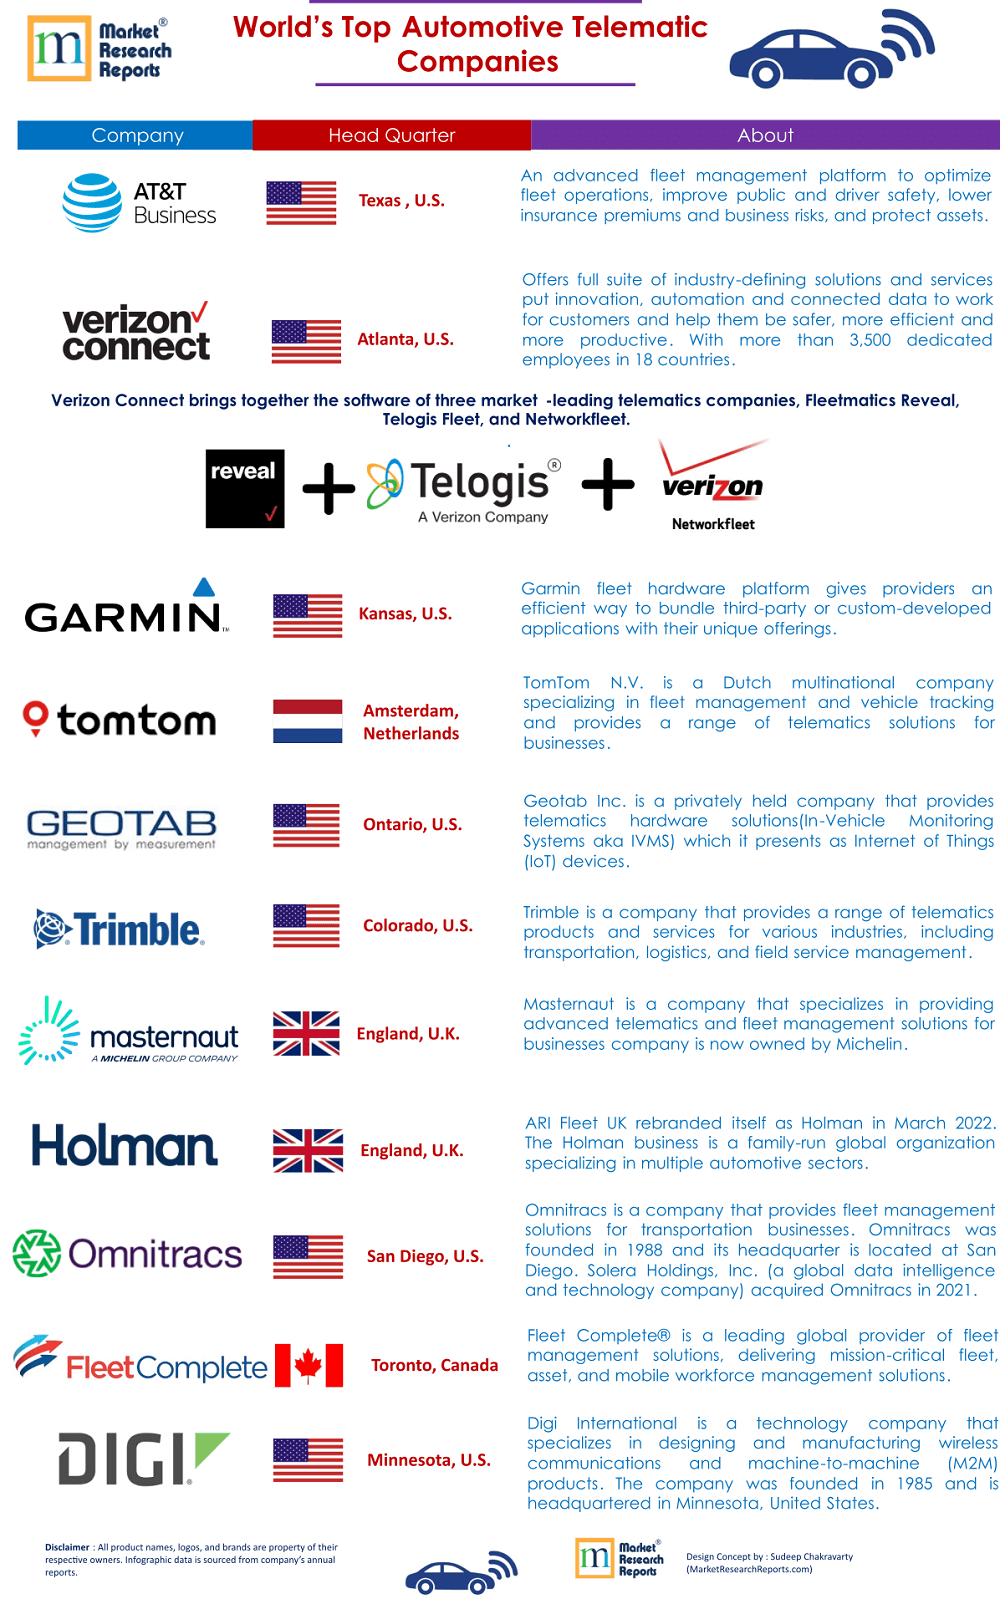 World’s Top Automotive Telematics Companies